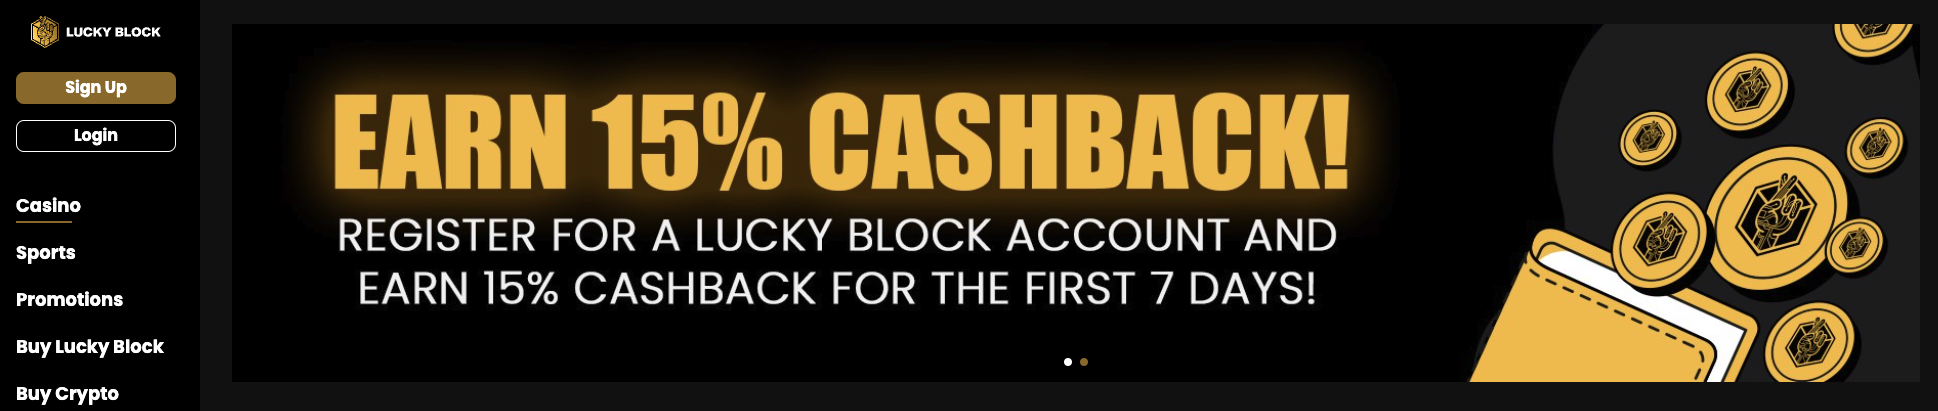 online casino zonder nederlandse vergunning - crypto casino lucky block